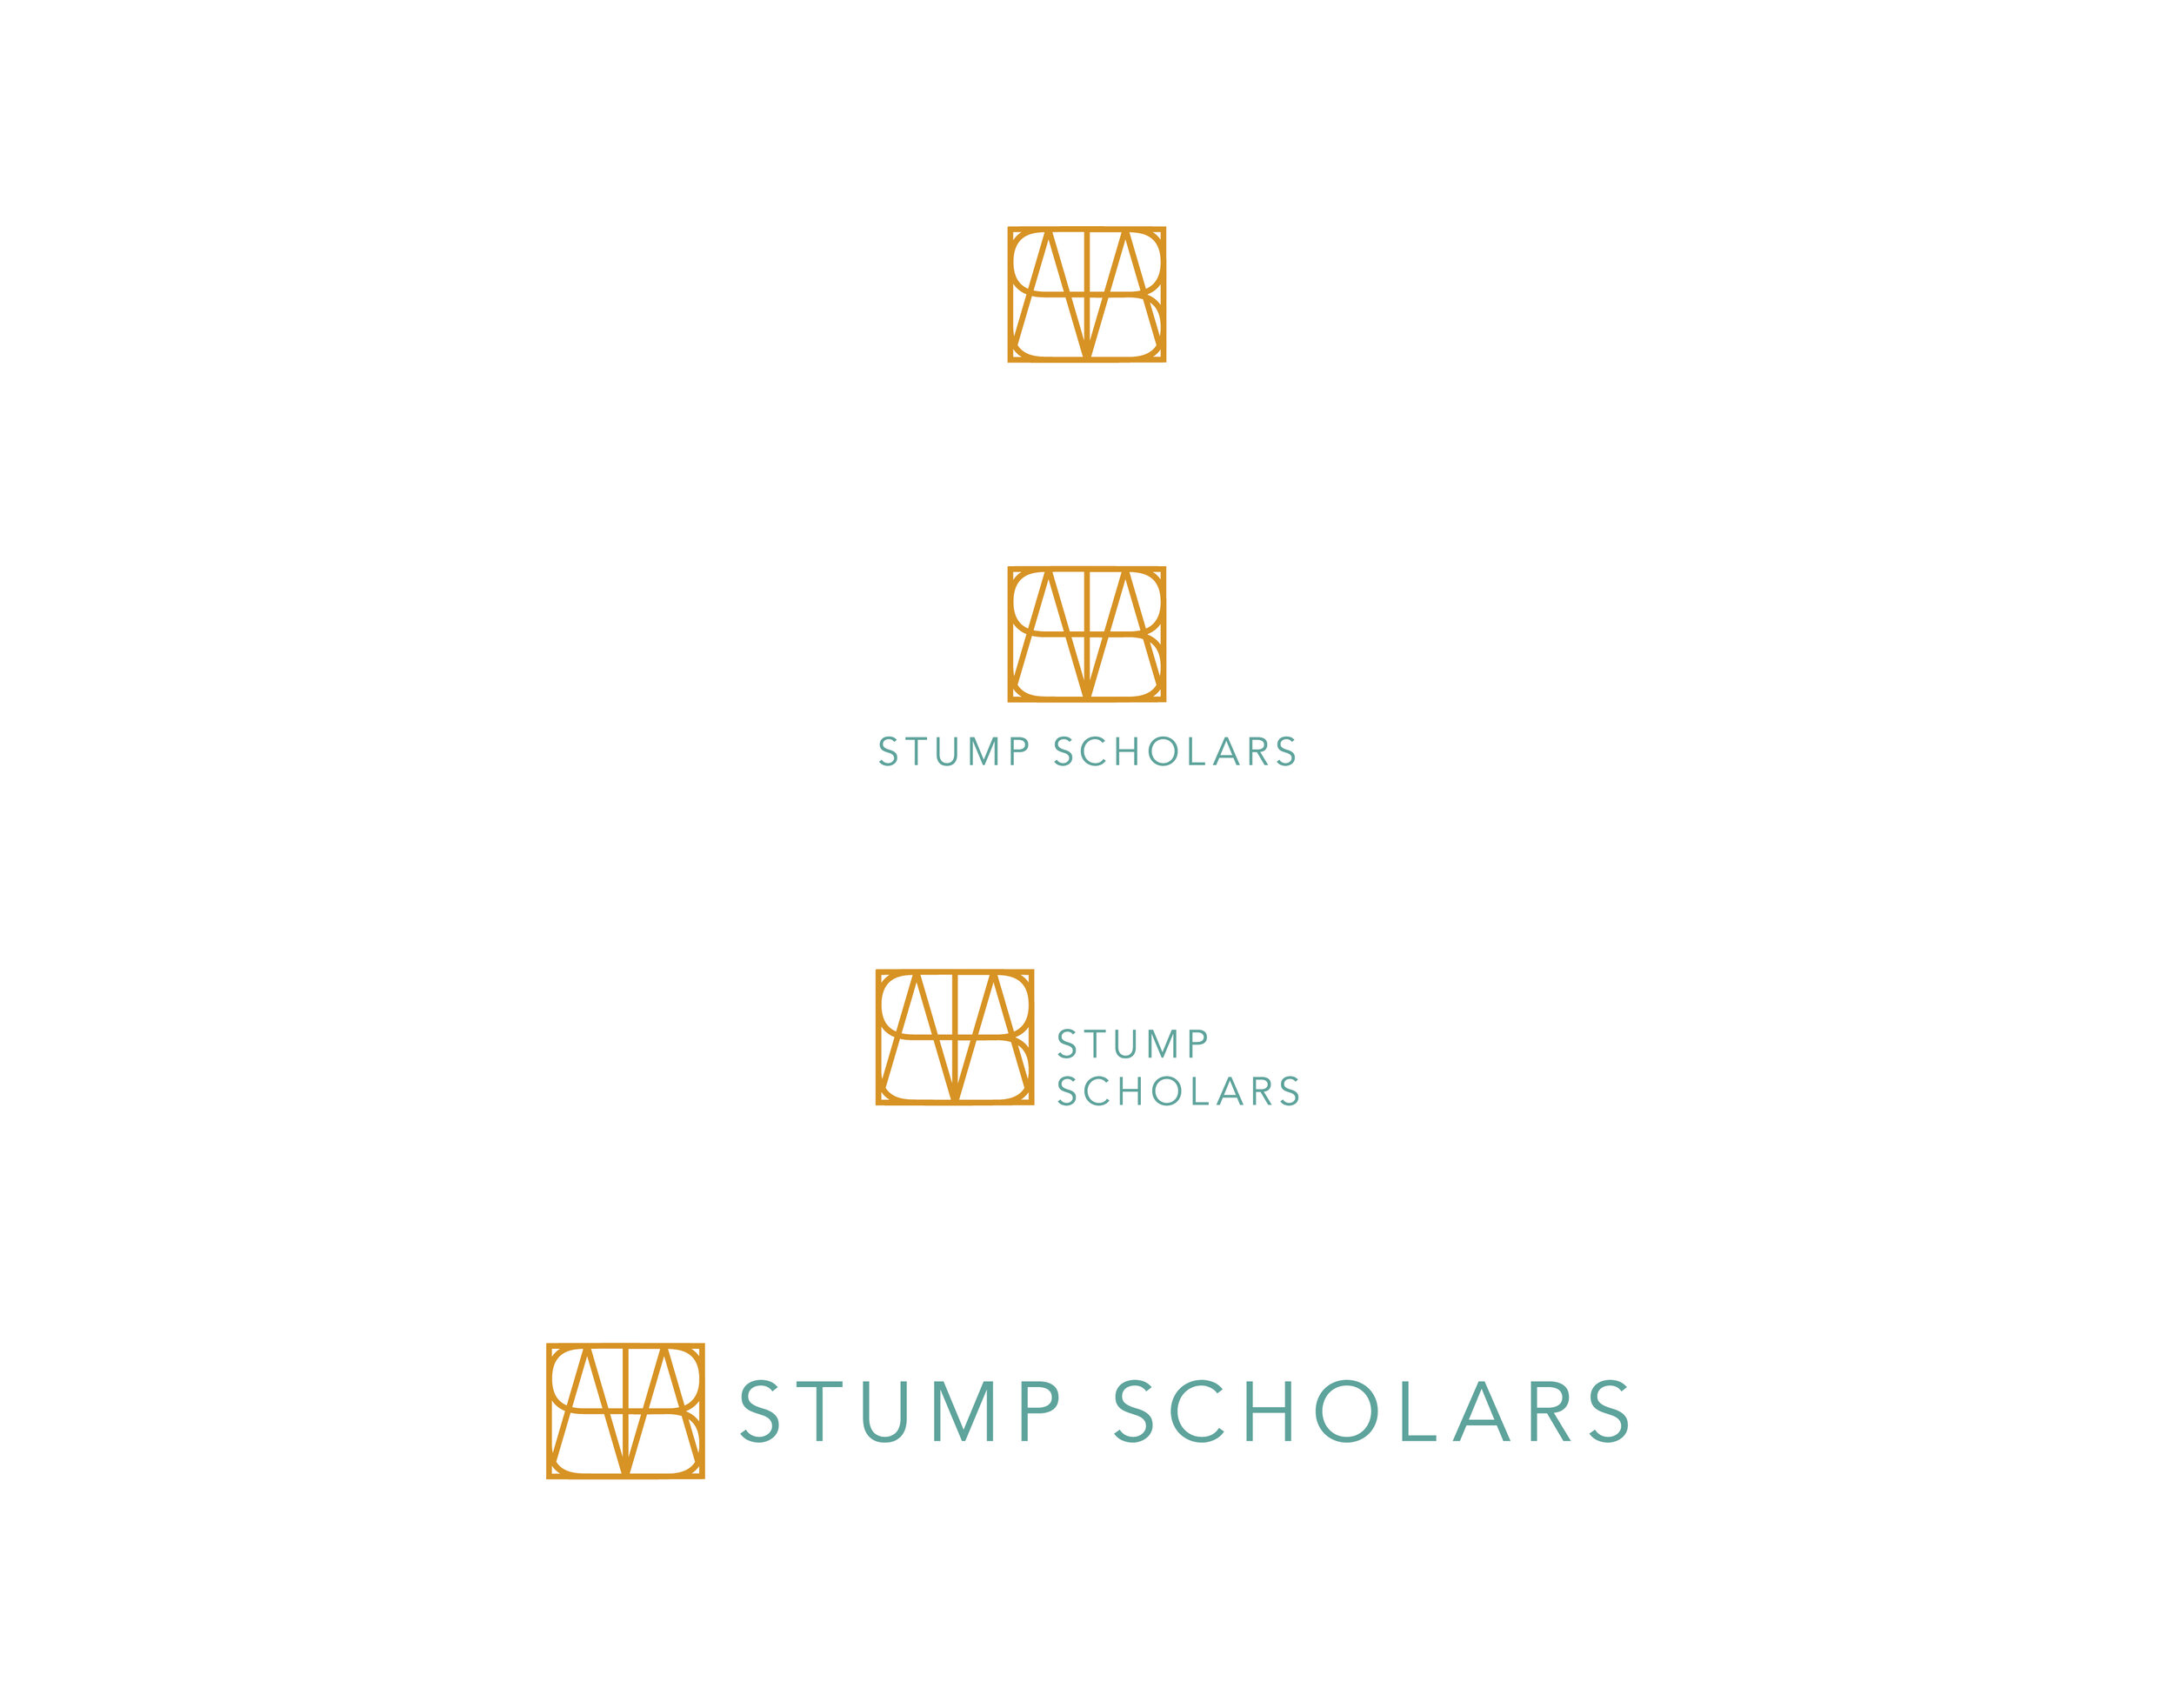 PFD_Stump Scholars_Logo Proposal_R14.jpg